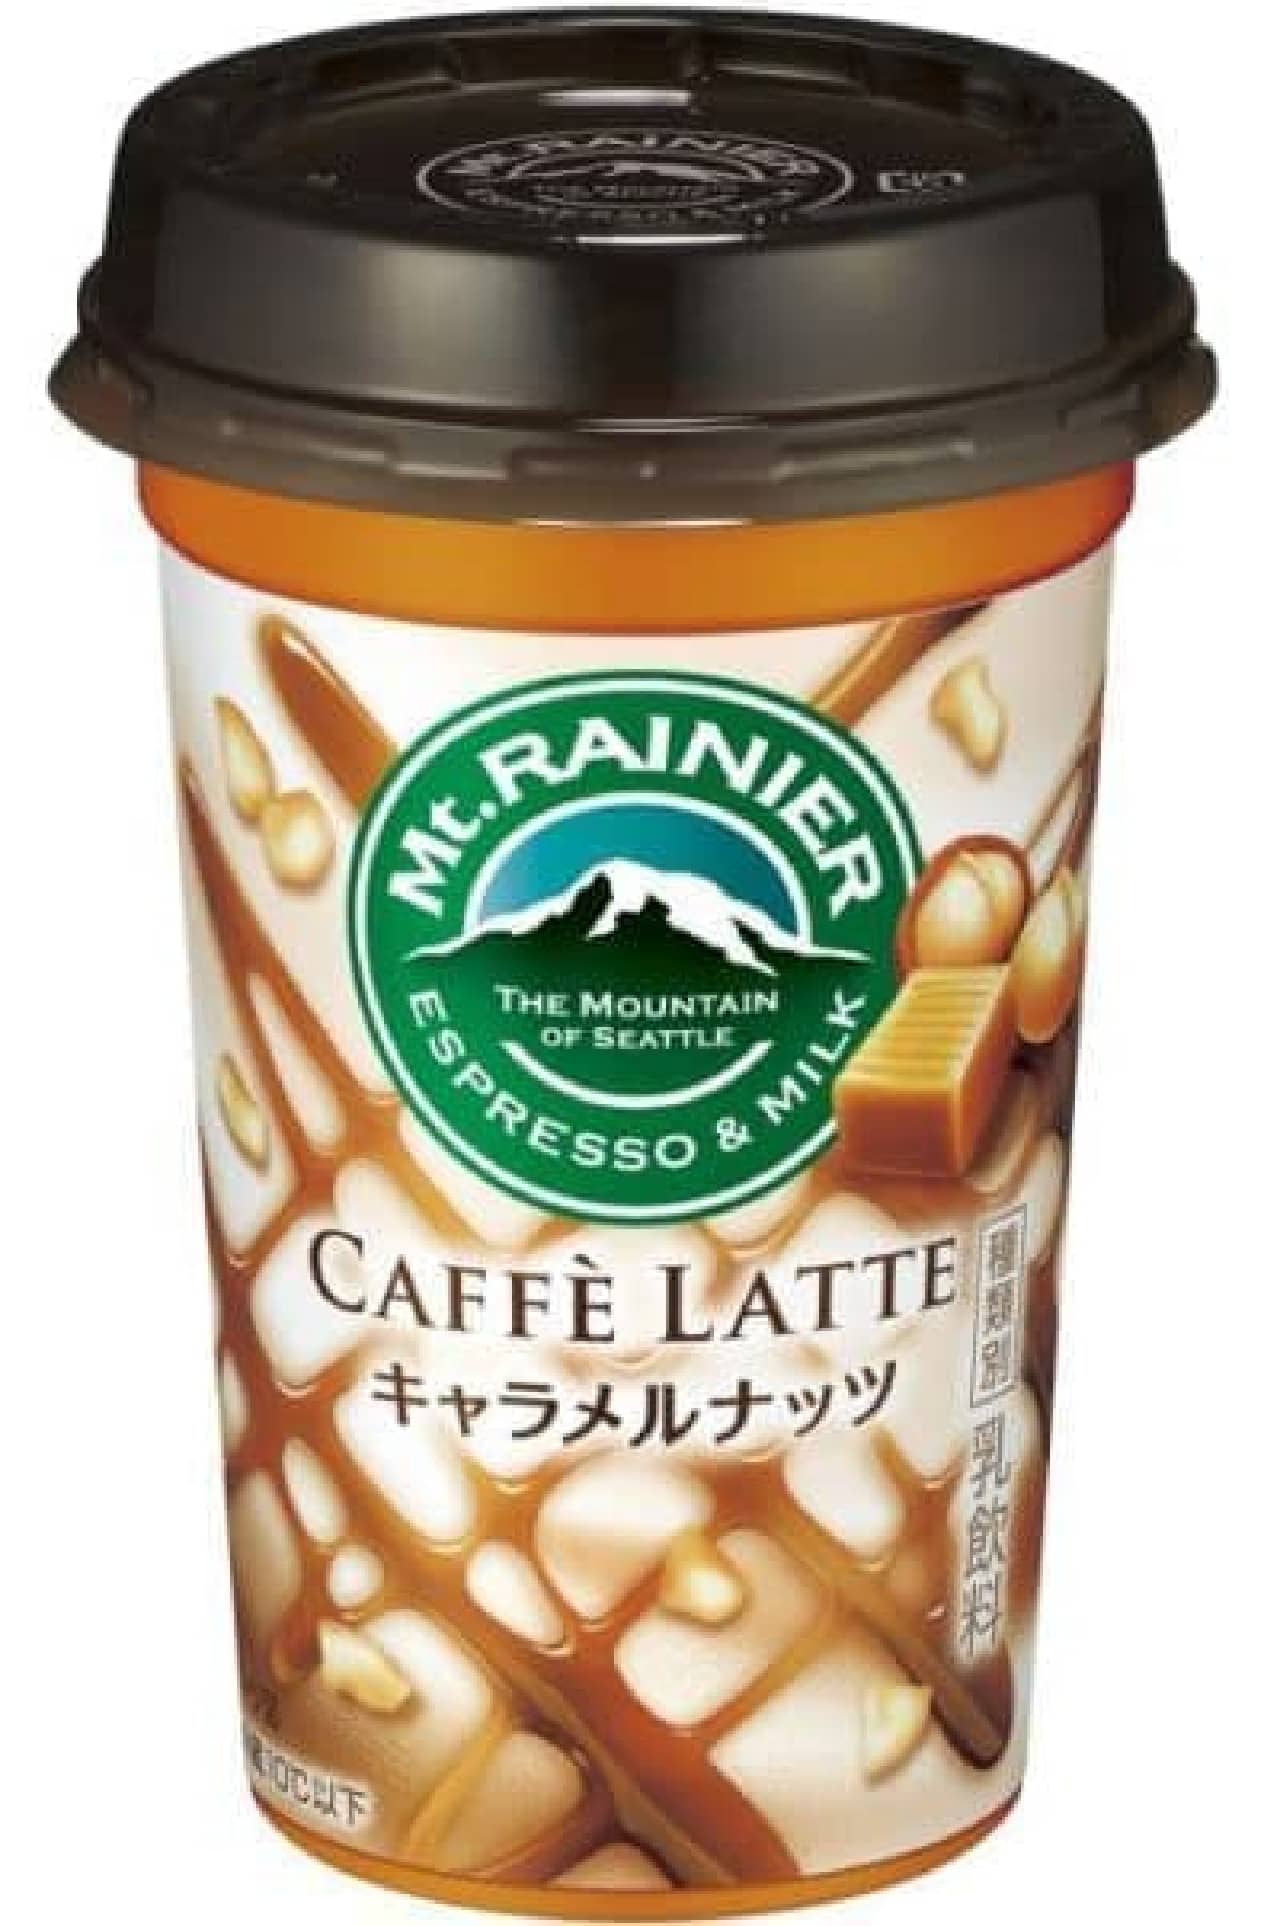 Mount Rainier "Mount Rainier Cafe Latte Caramel Nuts"